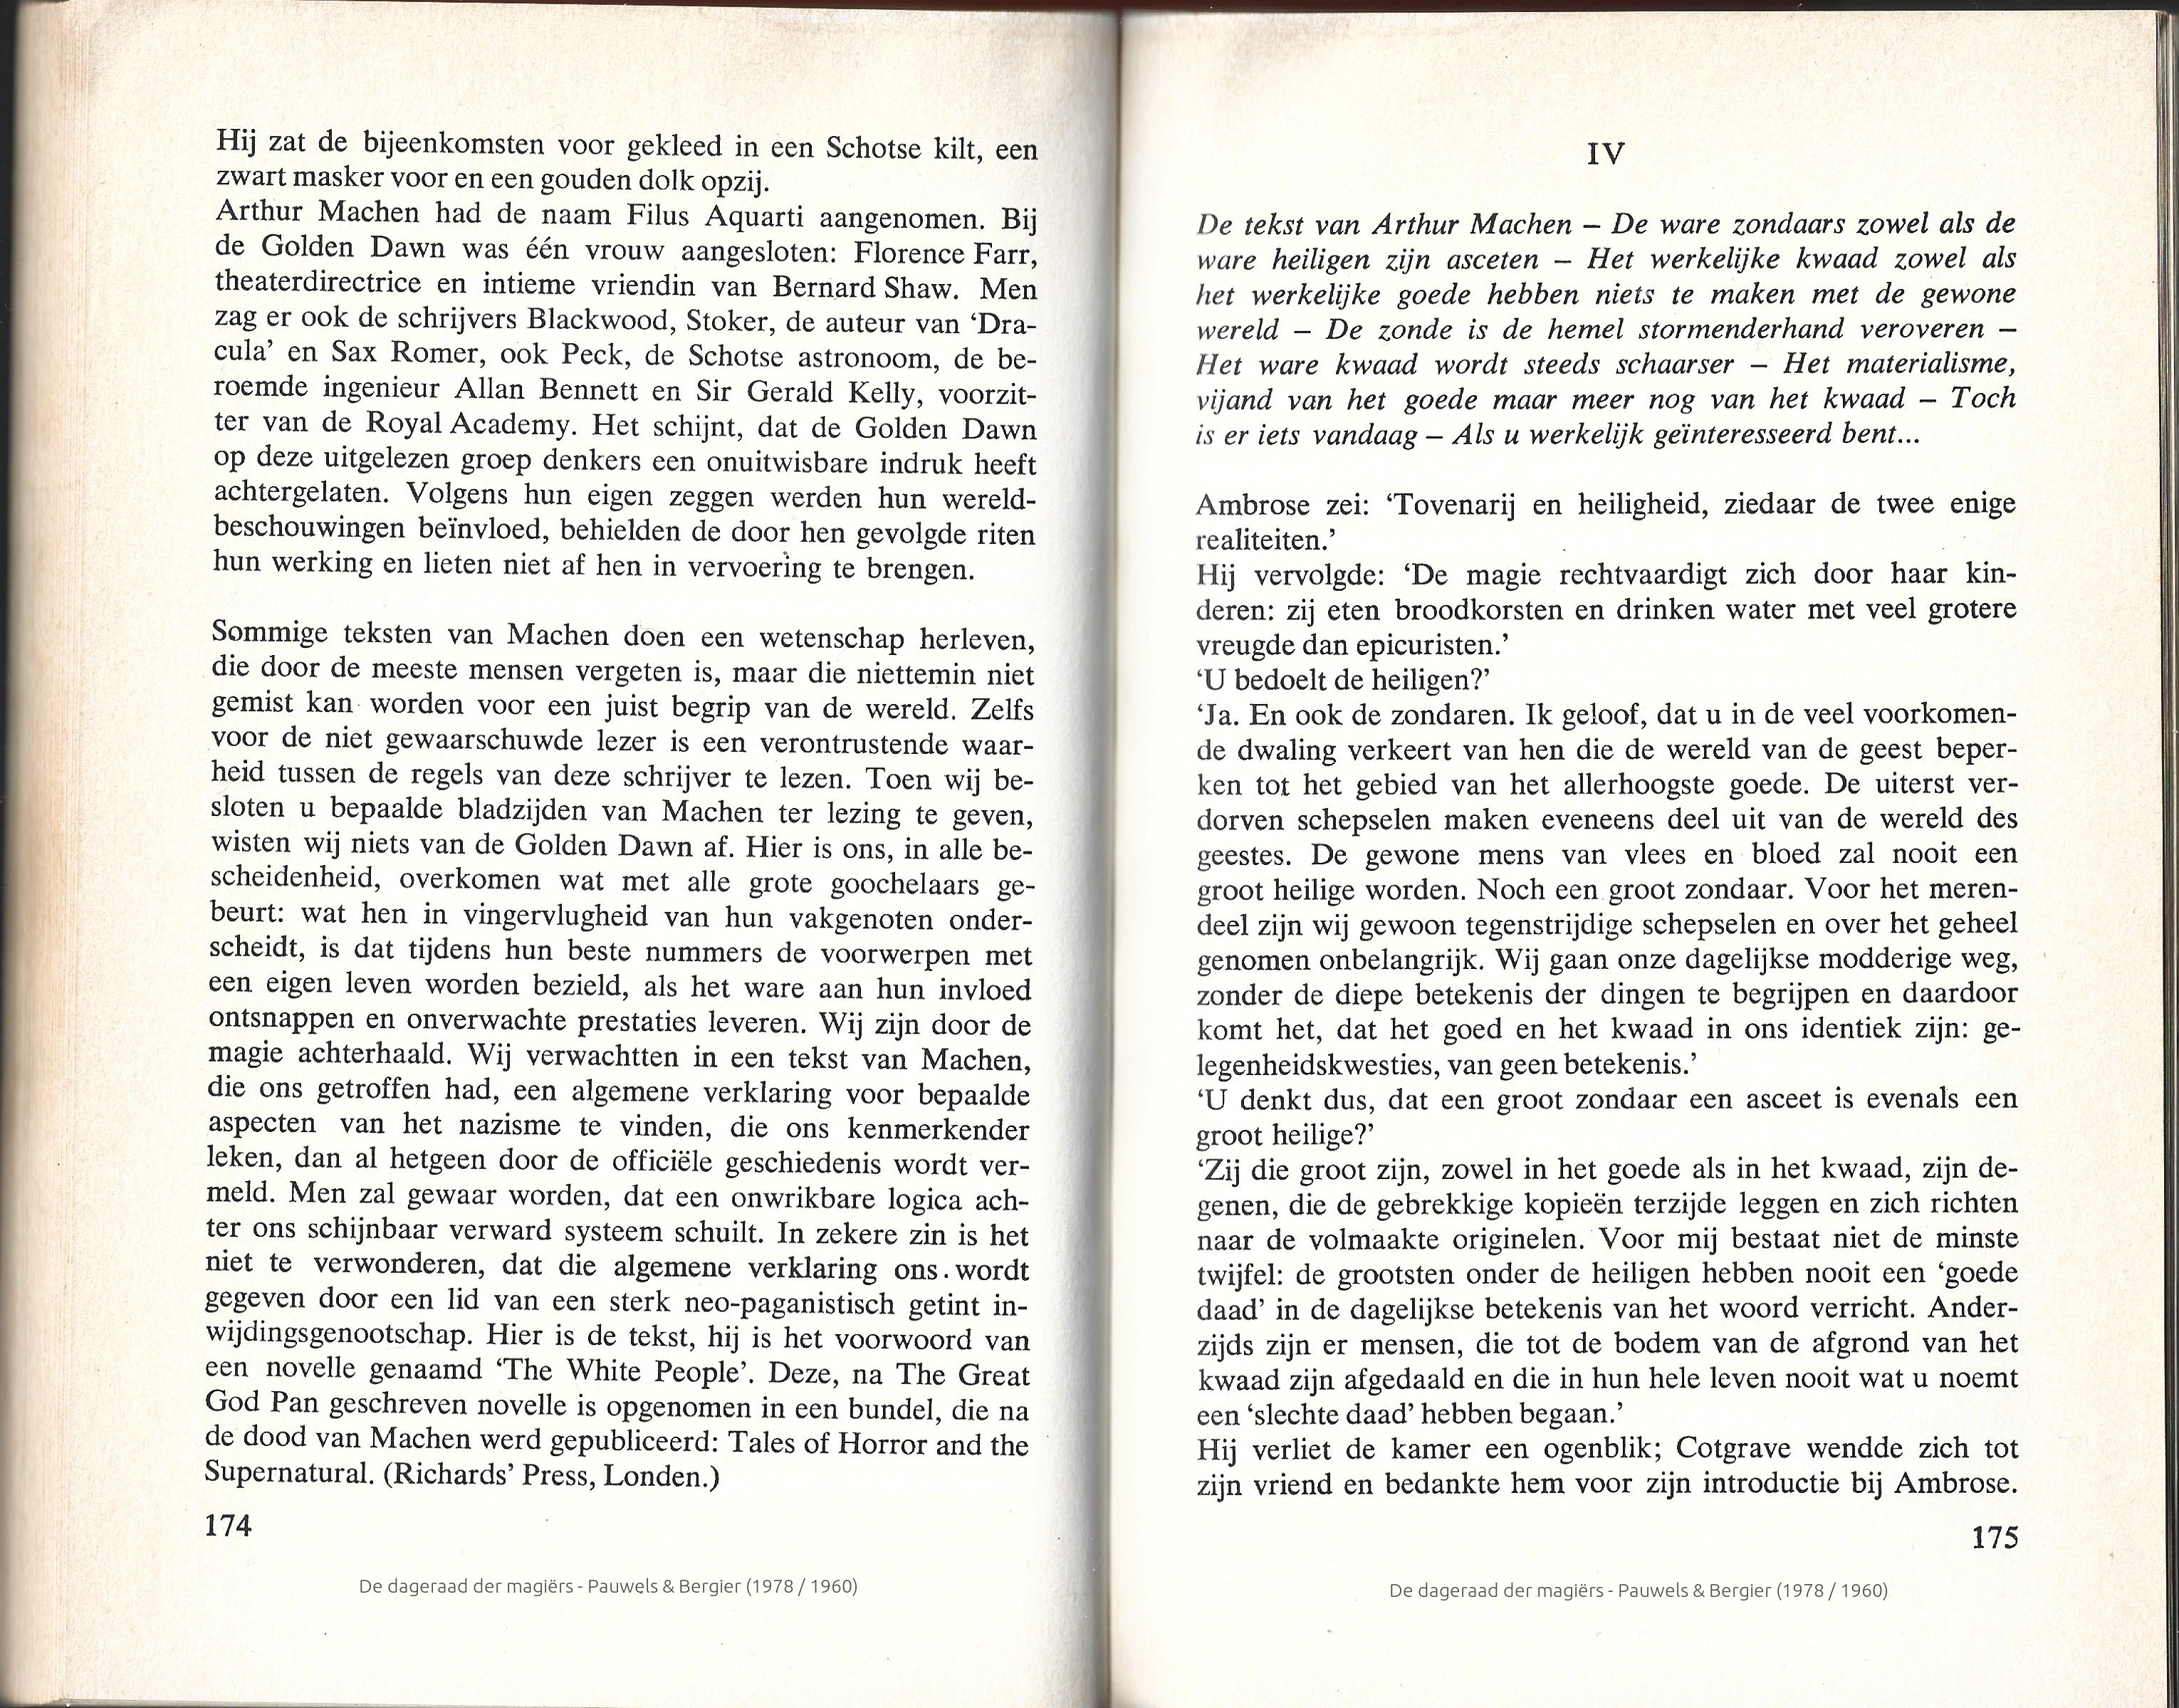 De dageraad der magiërs – Louis Pauwels & Jacques Bergier (1960), uitgave en vertaling De Bezige Bij, 9e druk, 1978. Pp. 174-175.